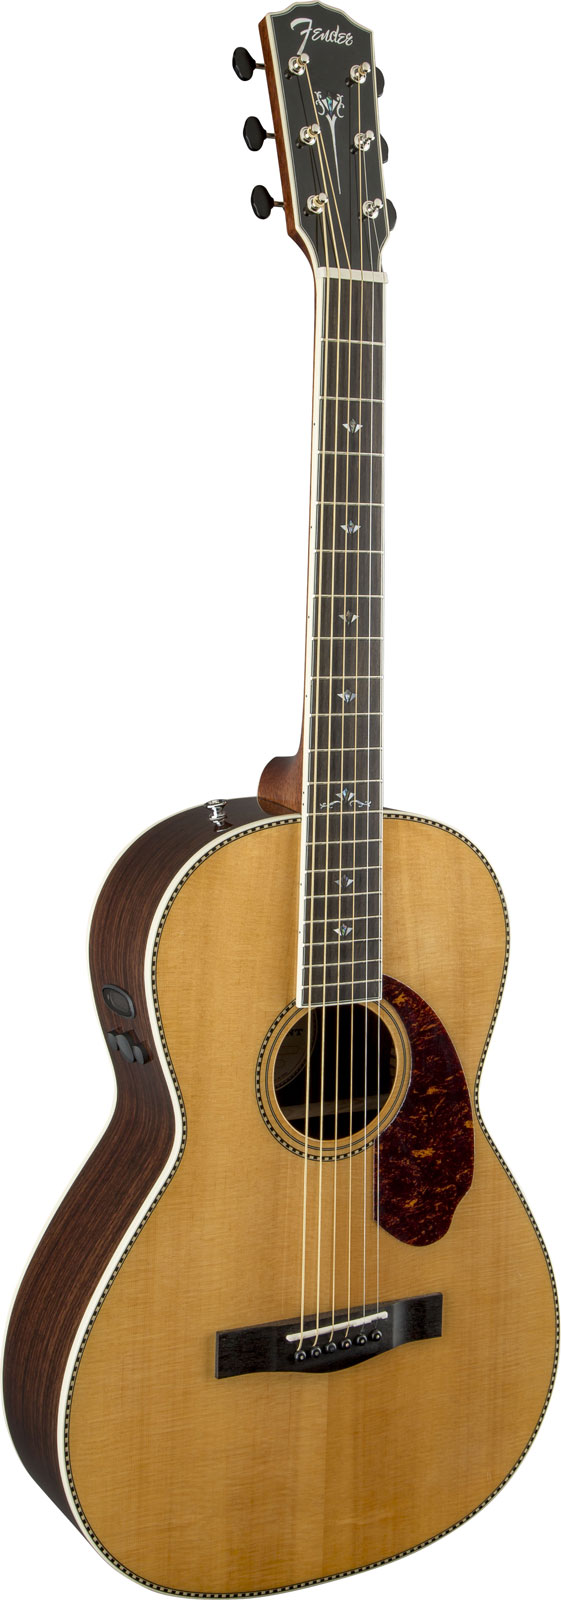 Pepino autómata naranja Guitarra electroacústica Fender PM-2 STD Parlor